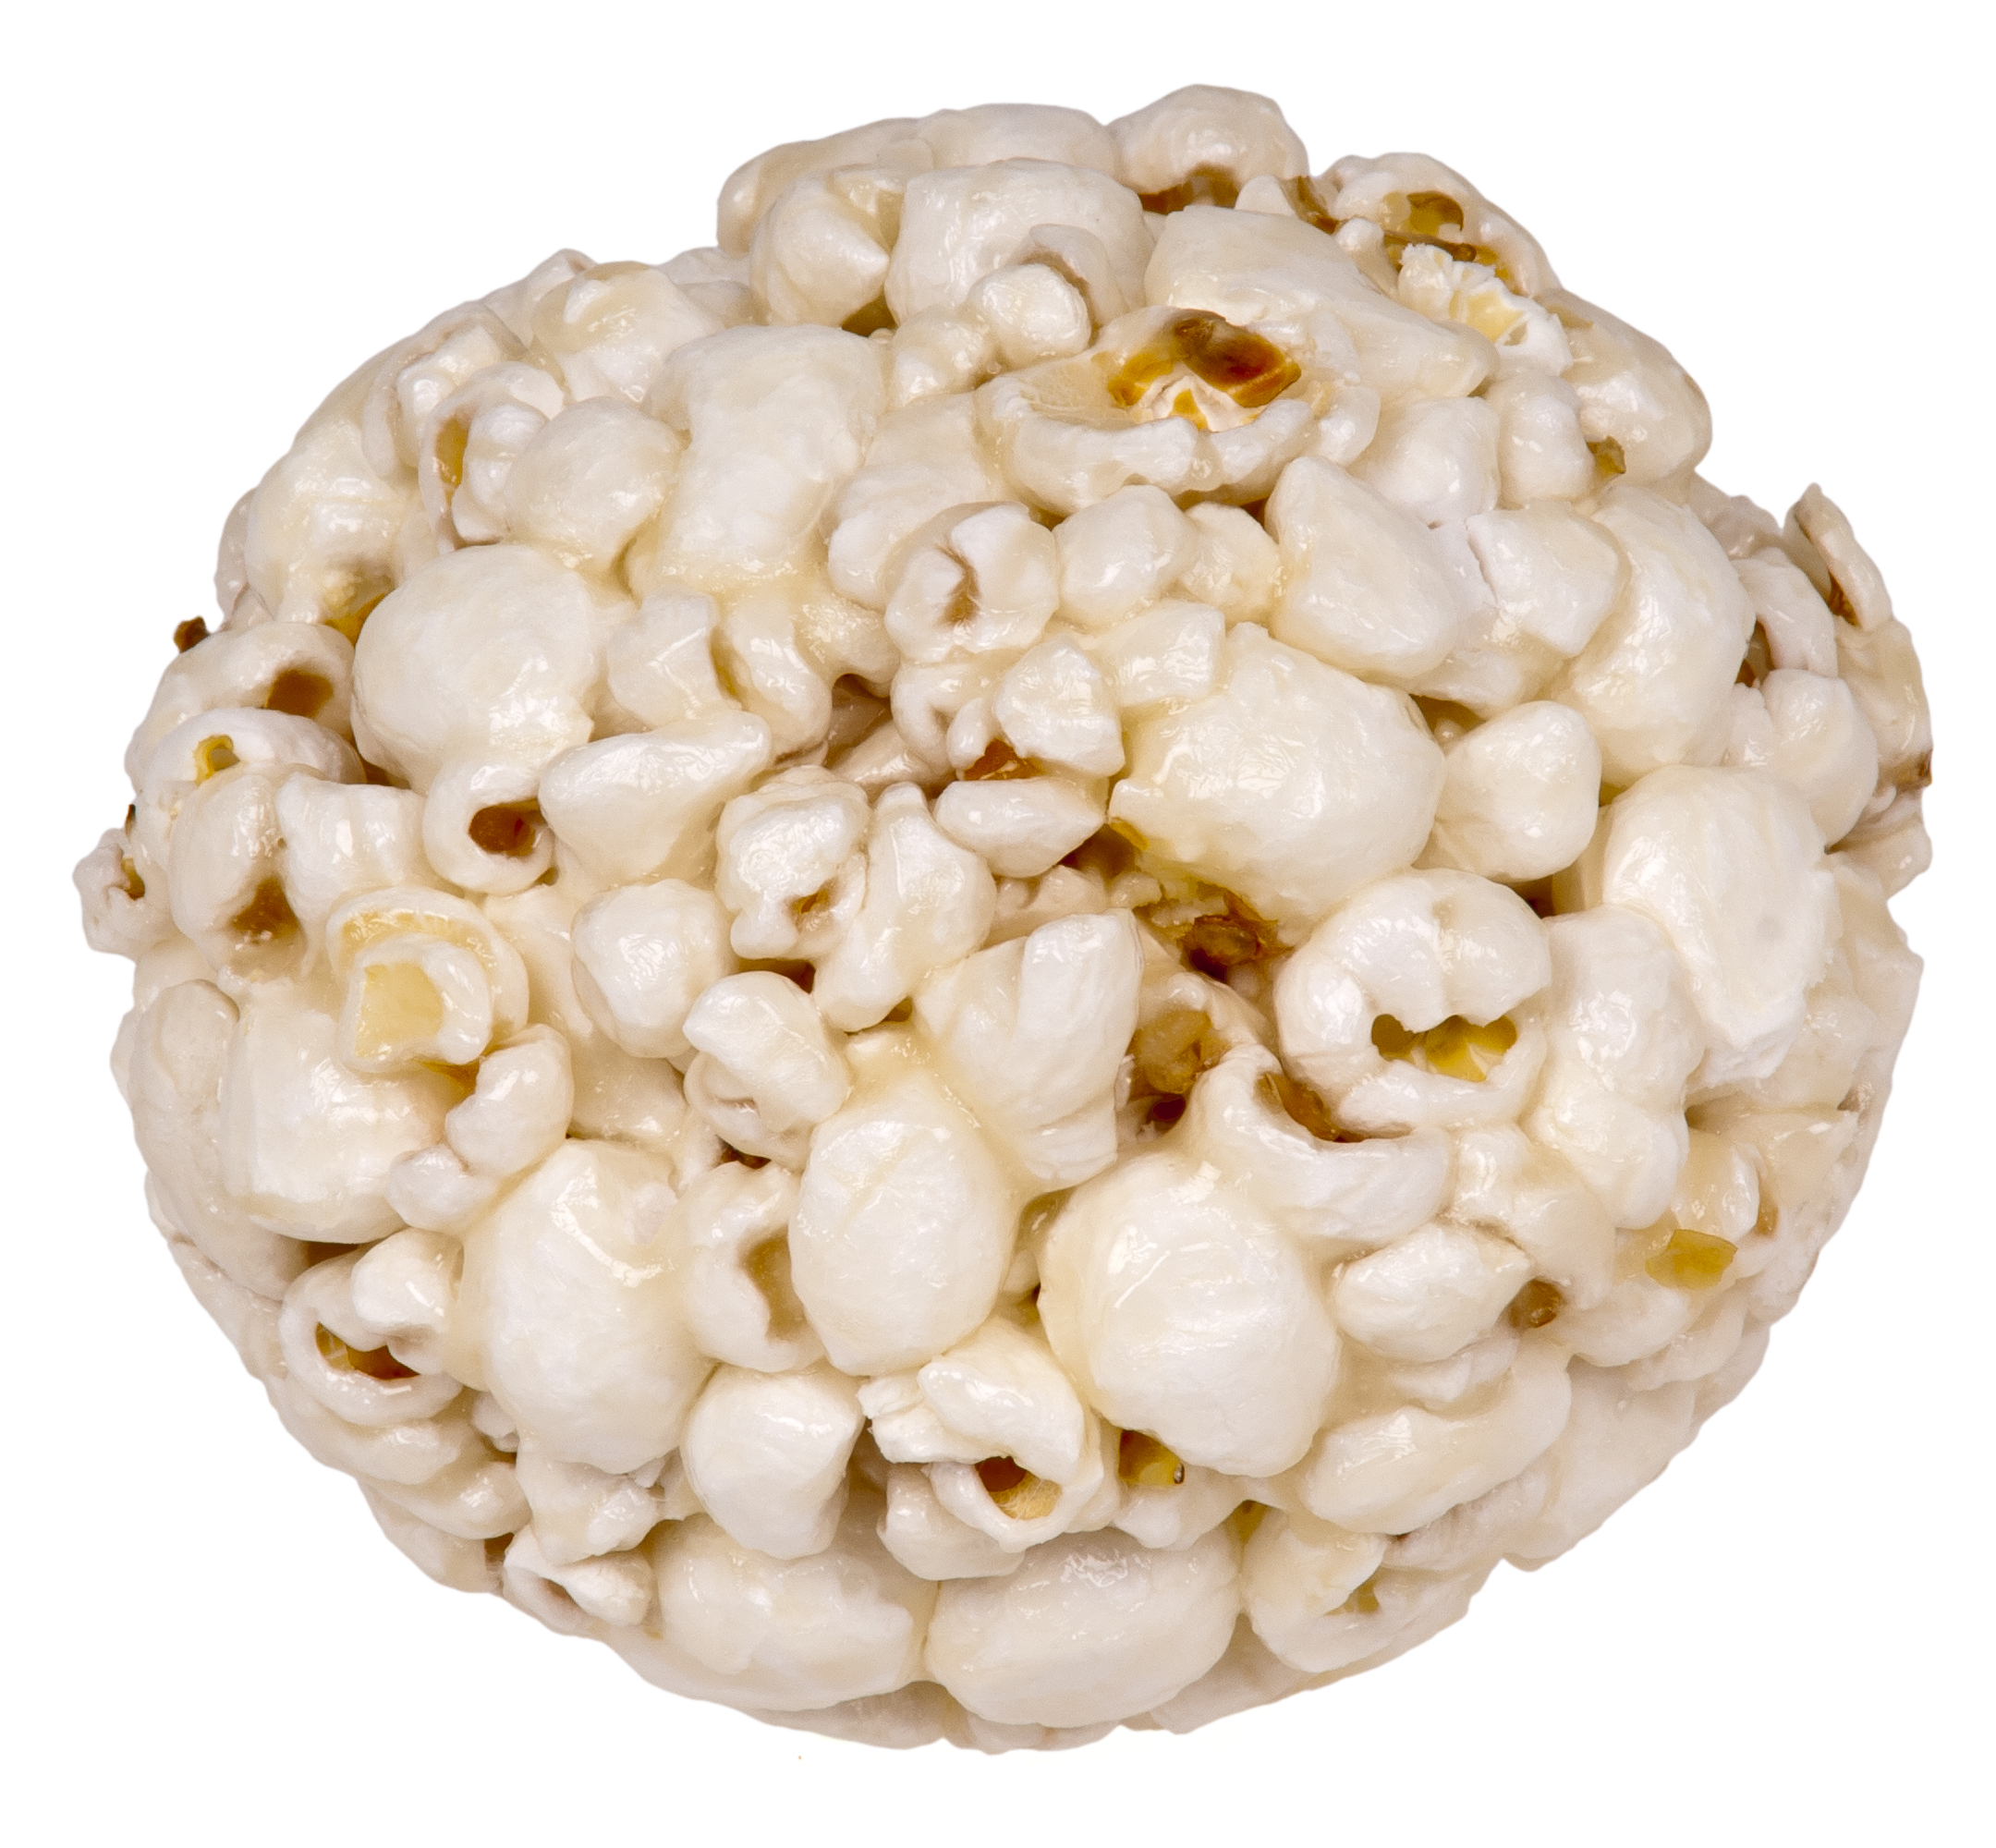 A popcorn ball